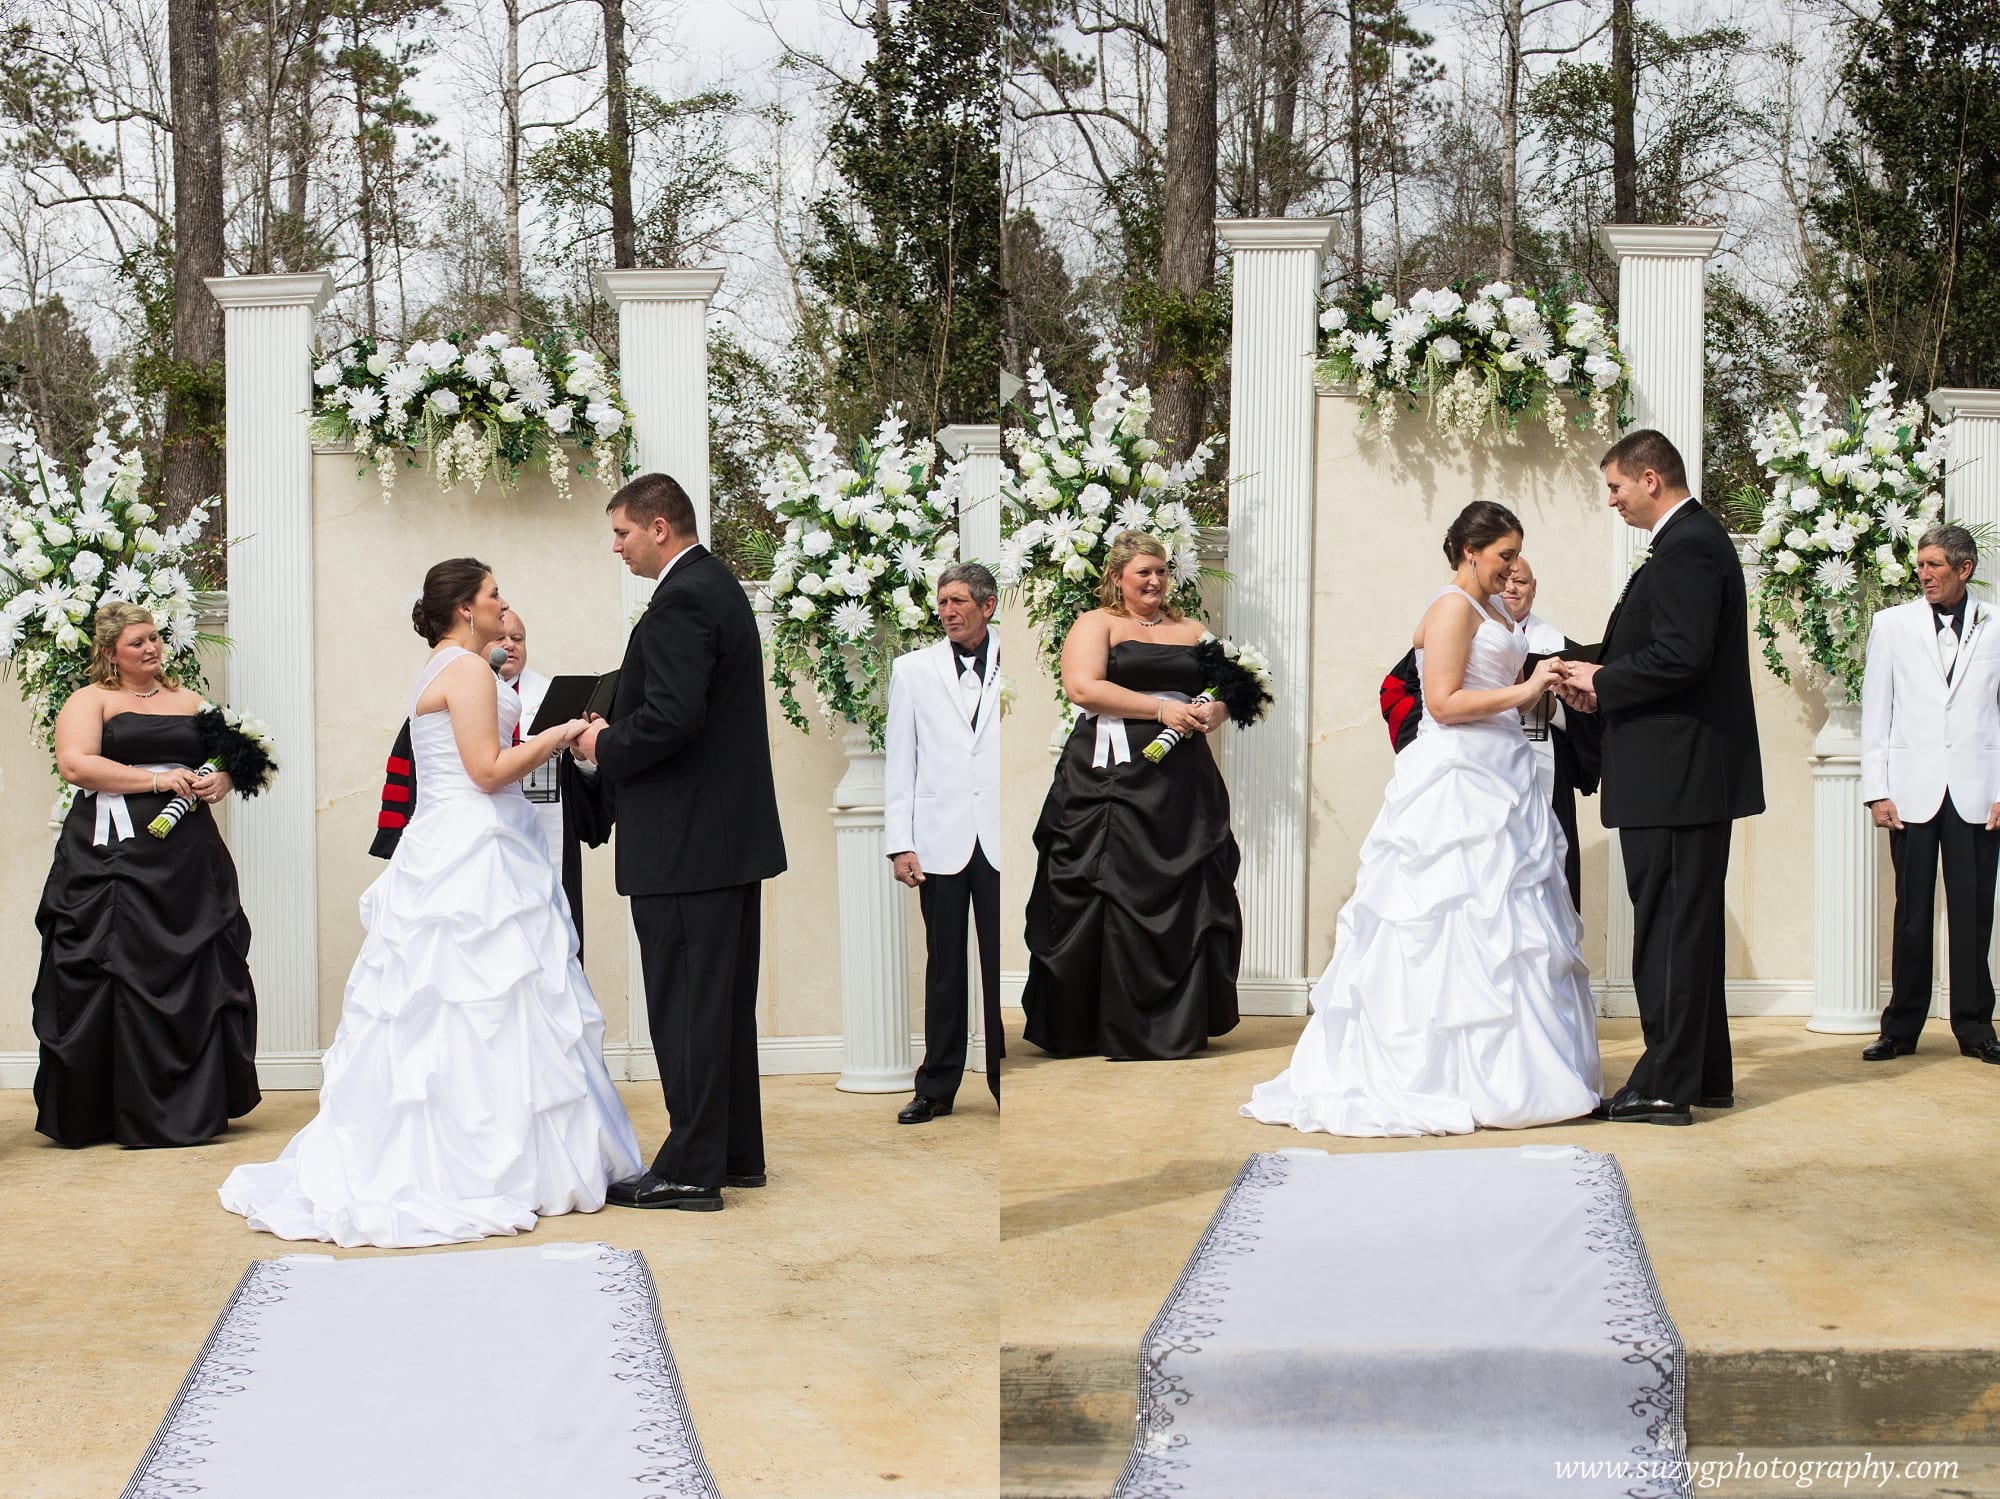 suzy g-louisiana castle-franklington louisiana- texas-mississippi-wedding photography-weddings-suzygphotography_0023